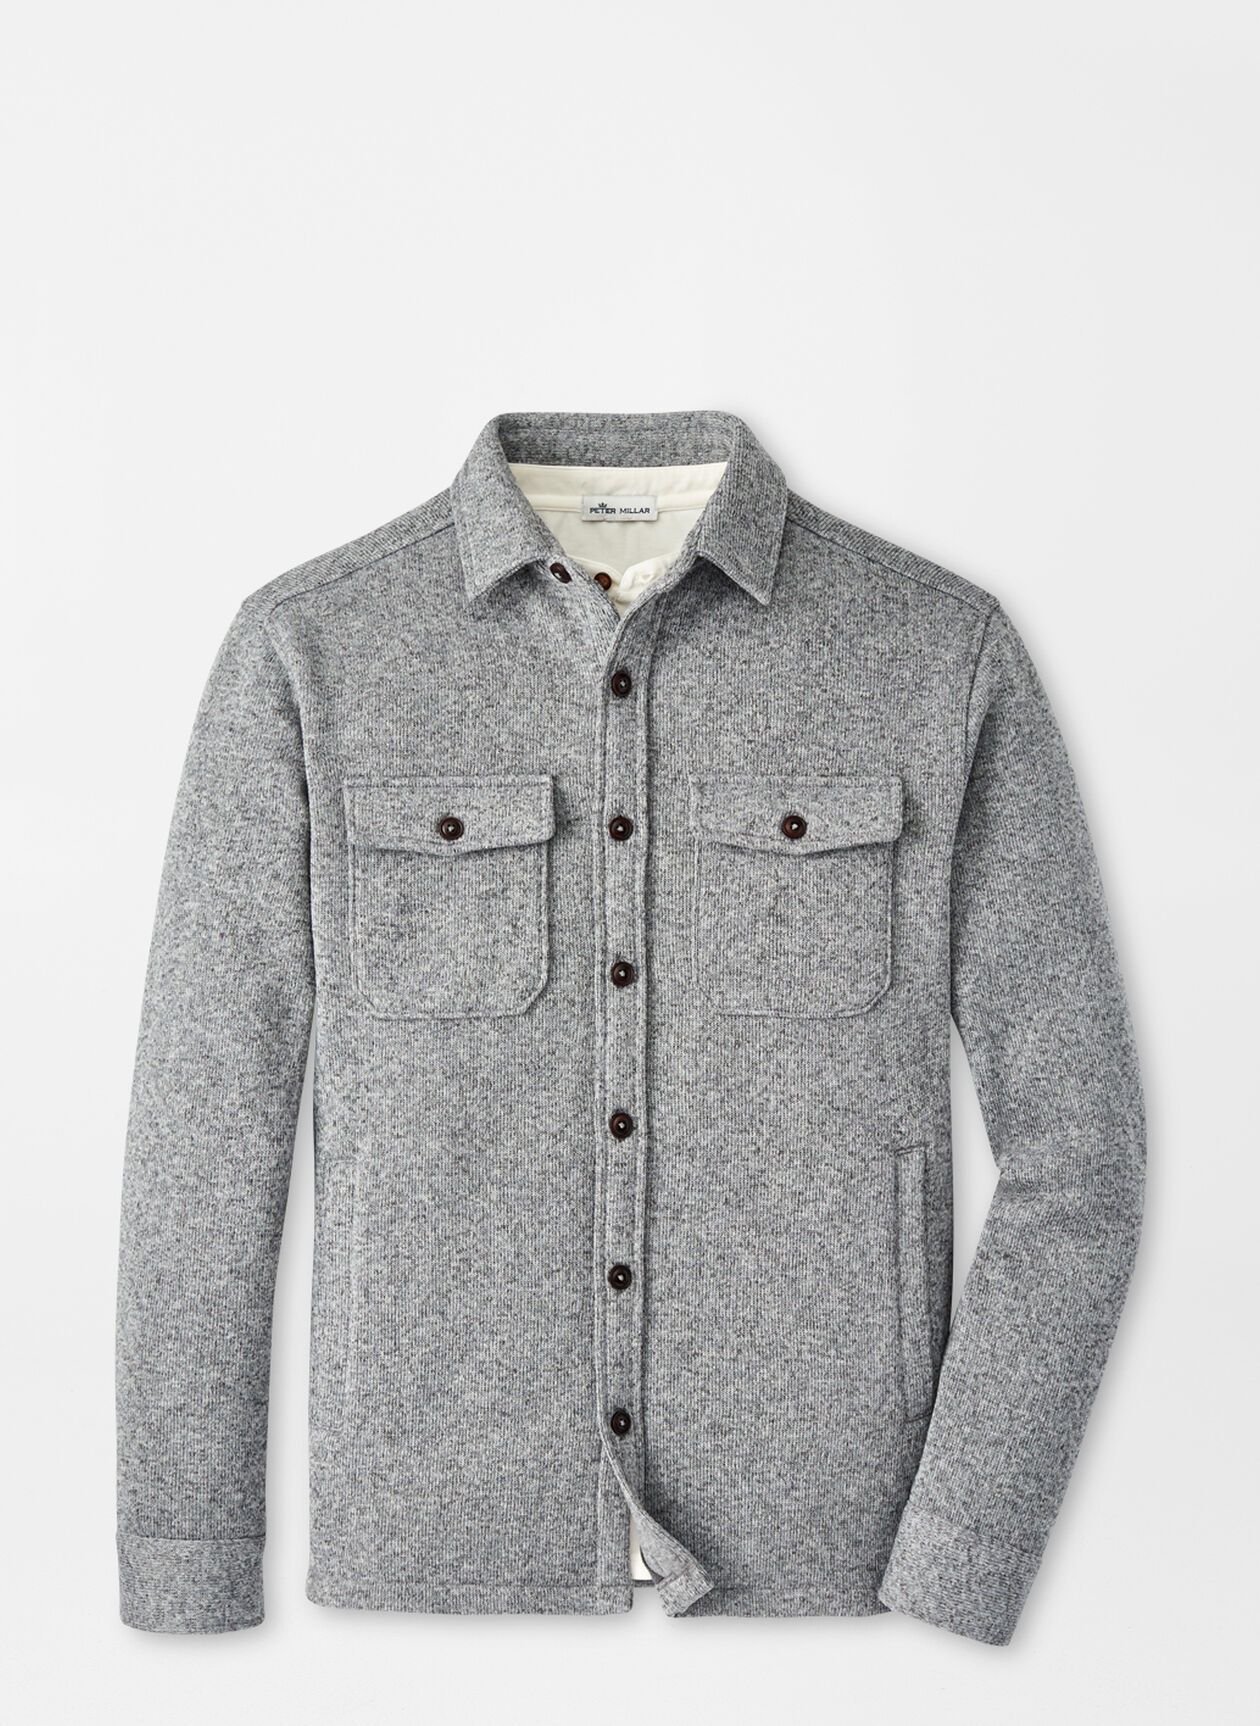 Crown Sweater Fleece Shirt Jacket | Peter Millar